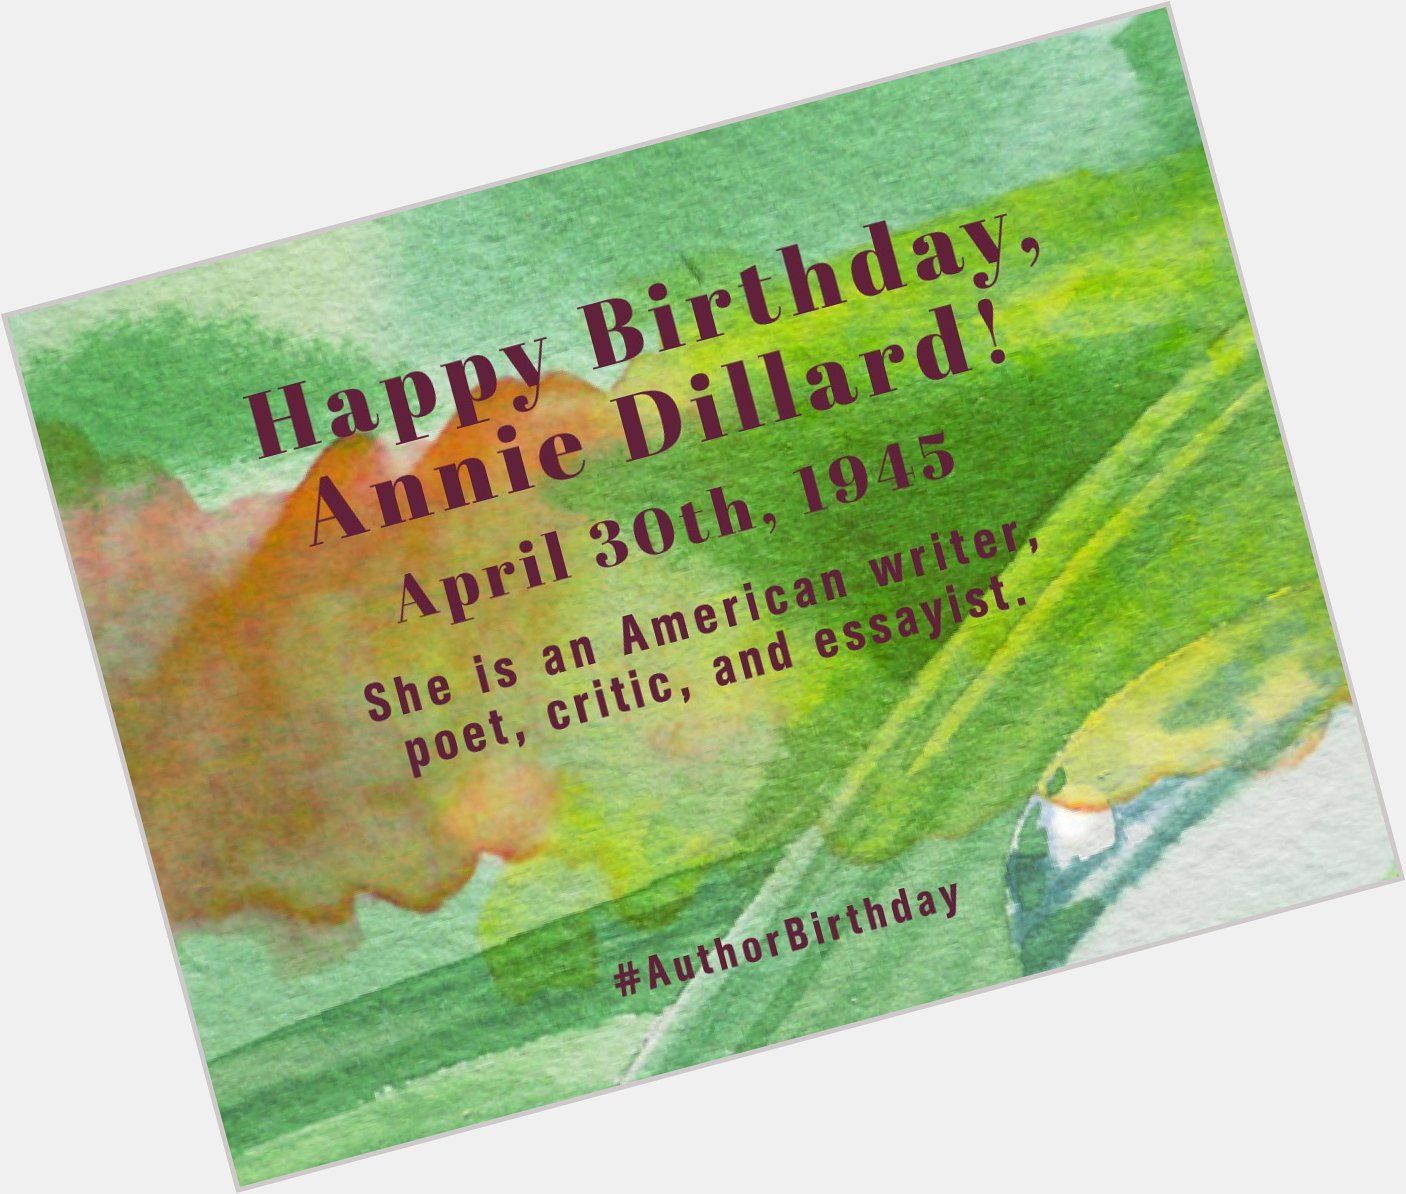 Happy birthday, Annie Dillard! She wrote Pilgrim at Tinker Creek, which won a Pulitzer Prize. 